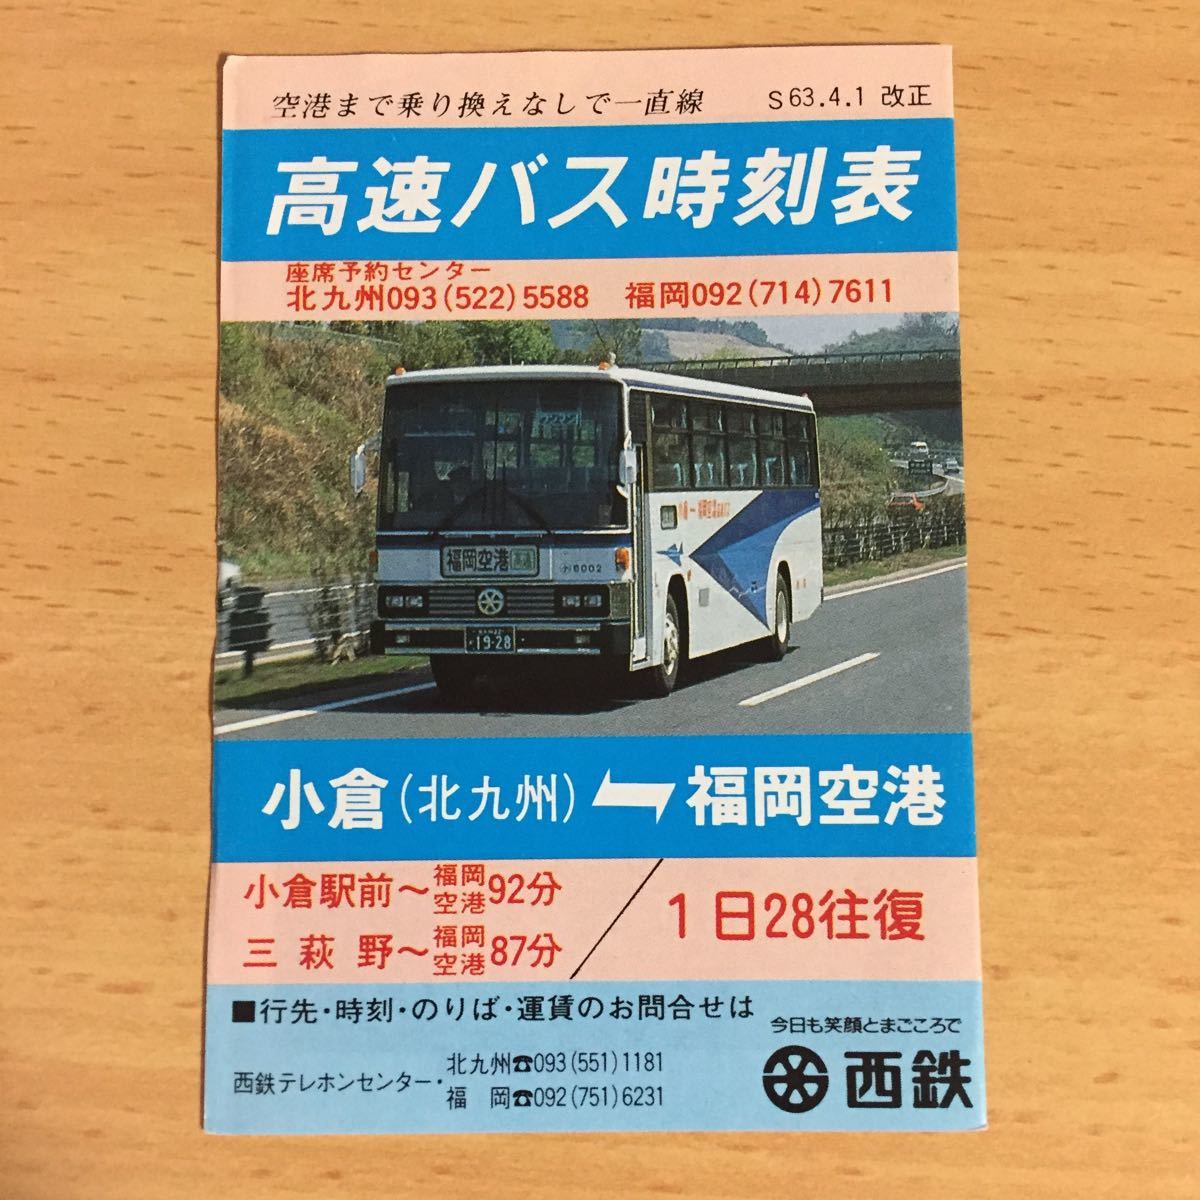 ヤフオク 西鉄高速バス 小倉 福岡空港 時刻表 昭和63年4月